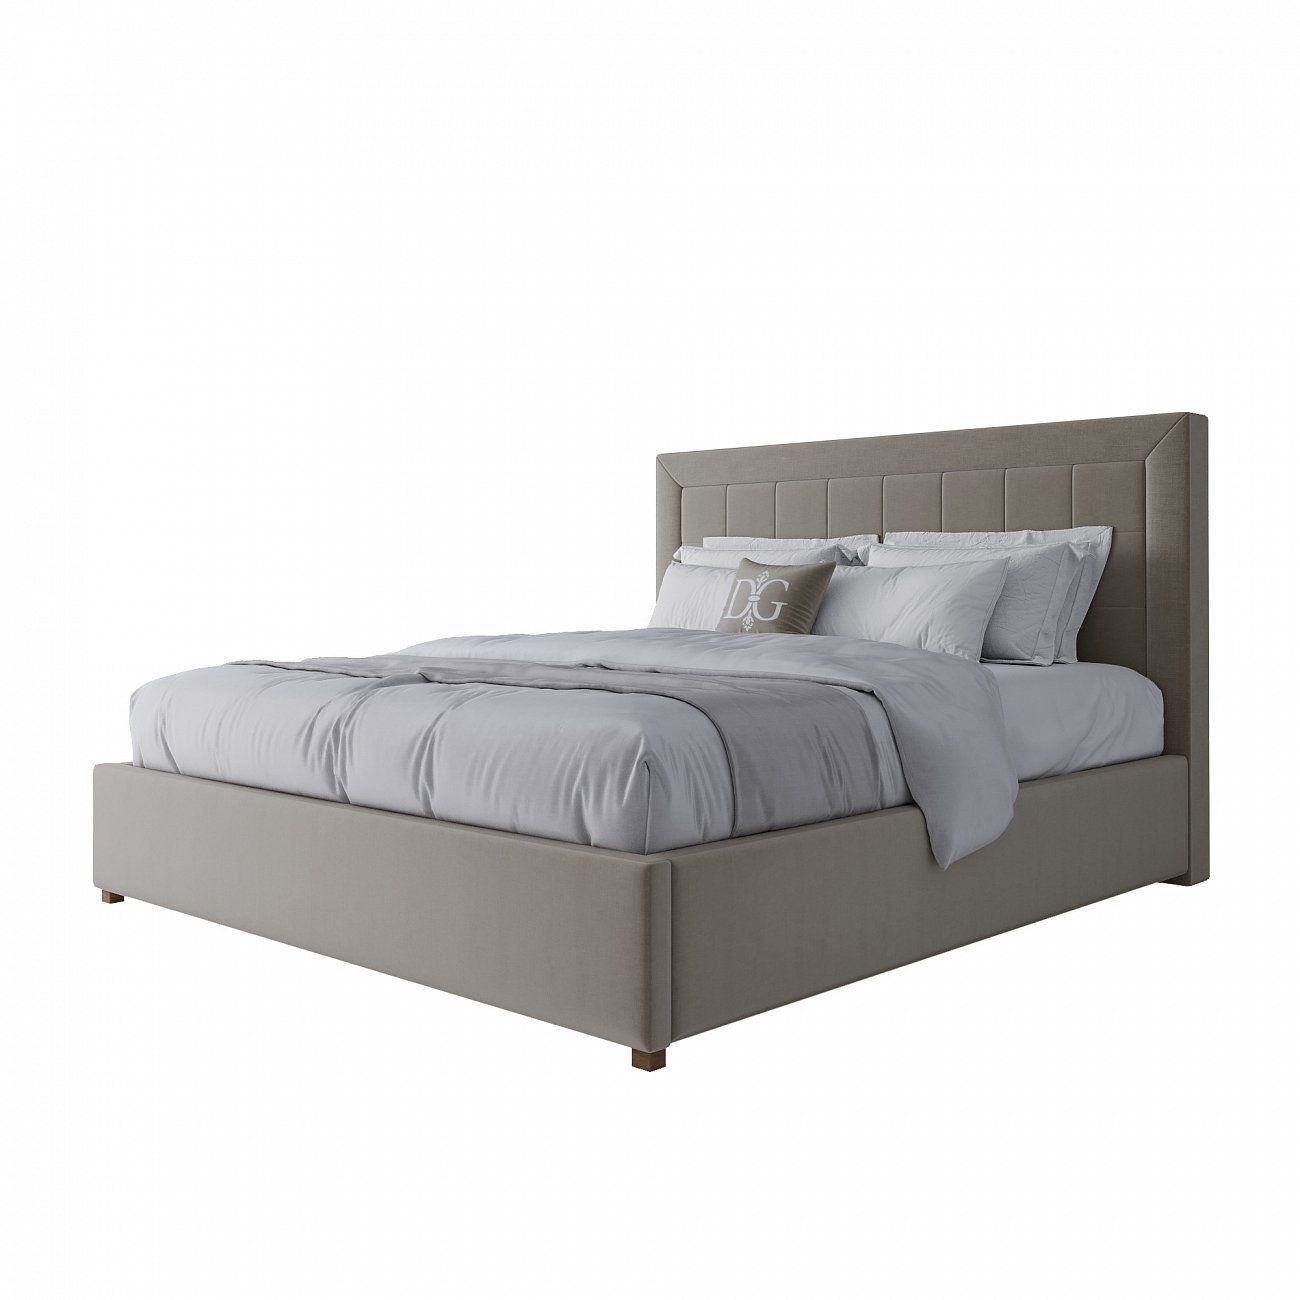 Double bed 180x200 cm brown-gray Elizabeth